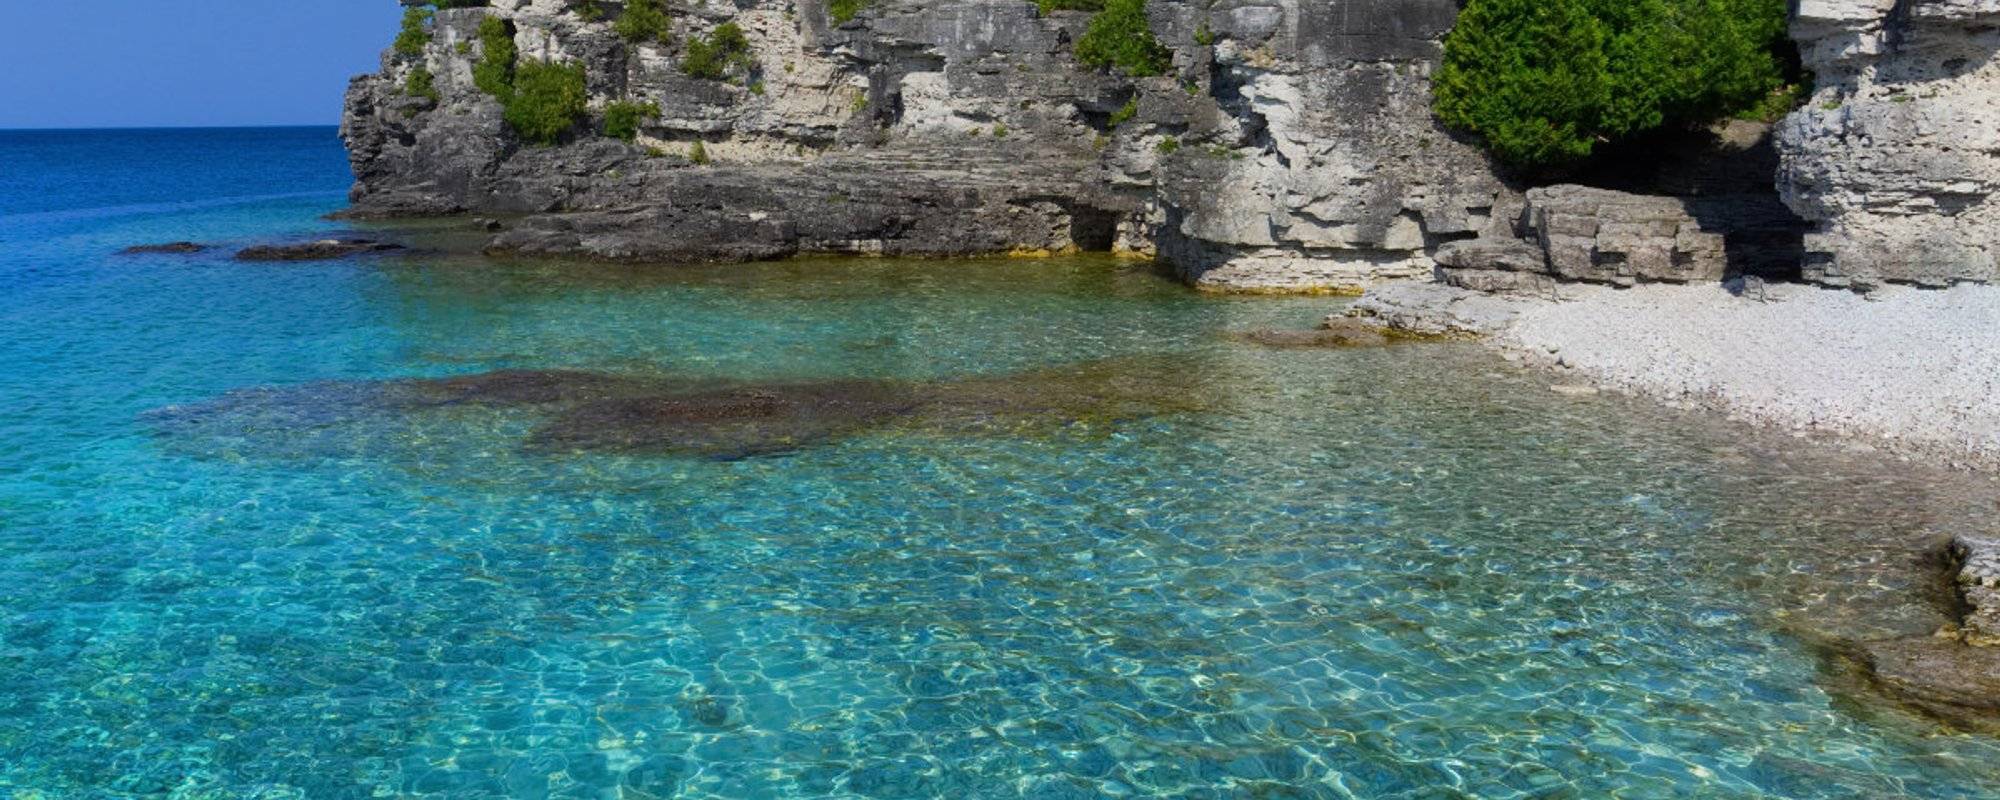 The Mediterranean in Canada? Exploring Bruce Peninsula National Park